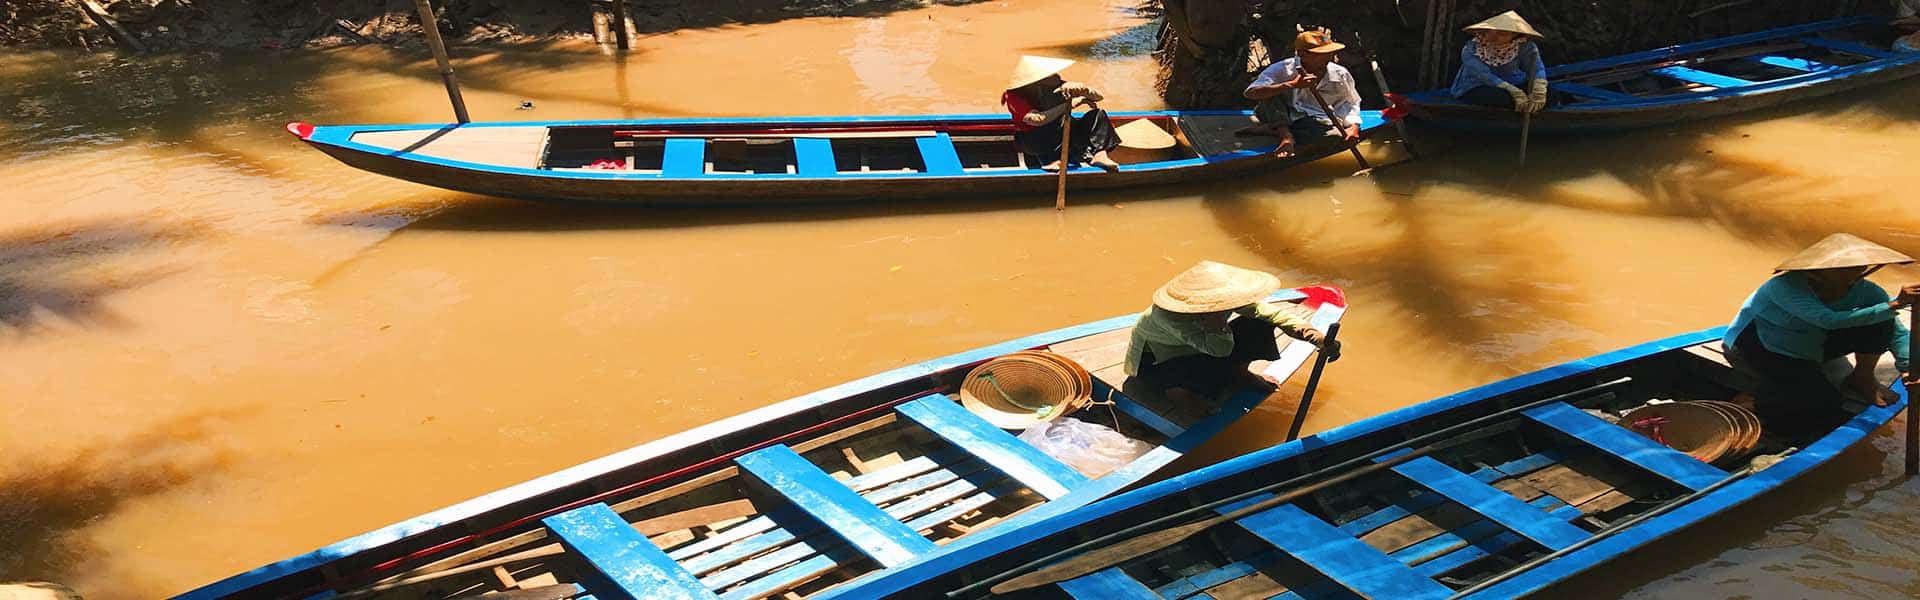 The heart of Mekong Delta